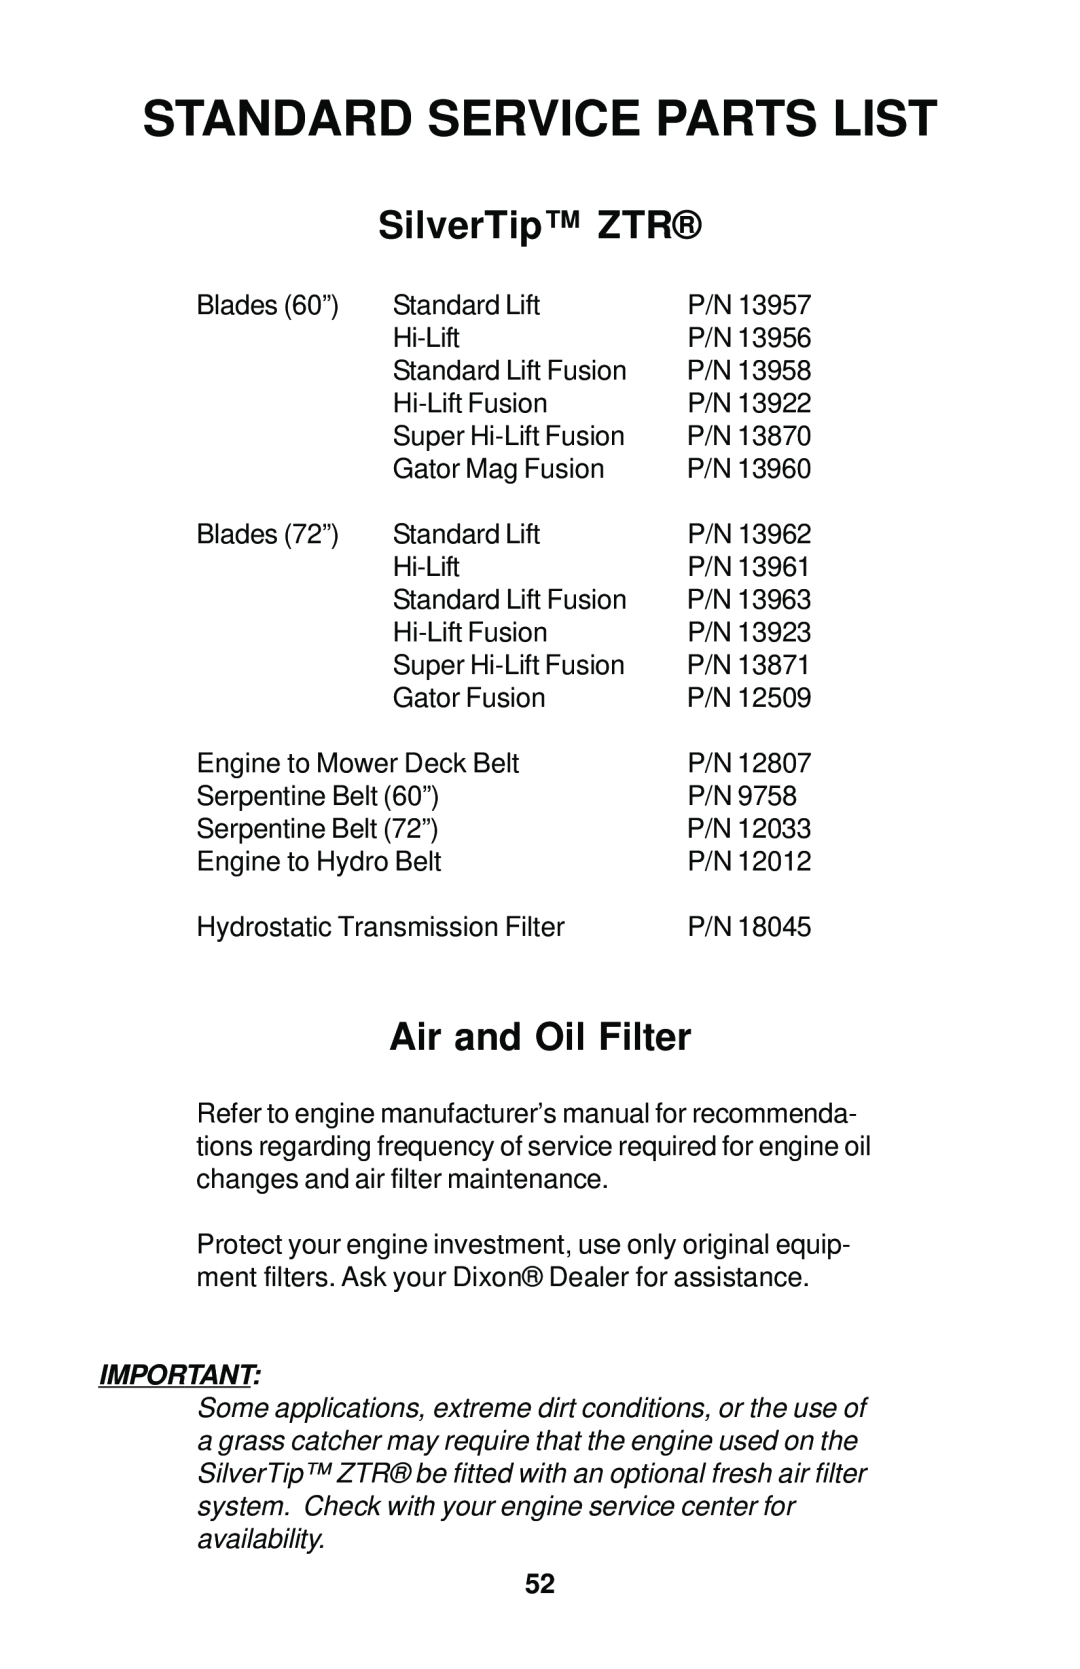 Dixon 12881-1104 manual Standard Service Parts List, SilverTip ZTR, Air and Oil Filter 